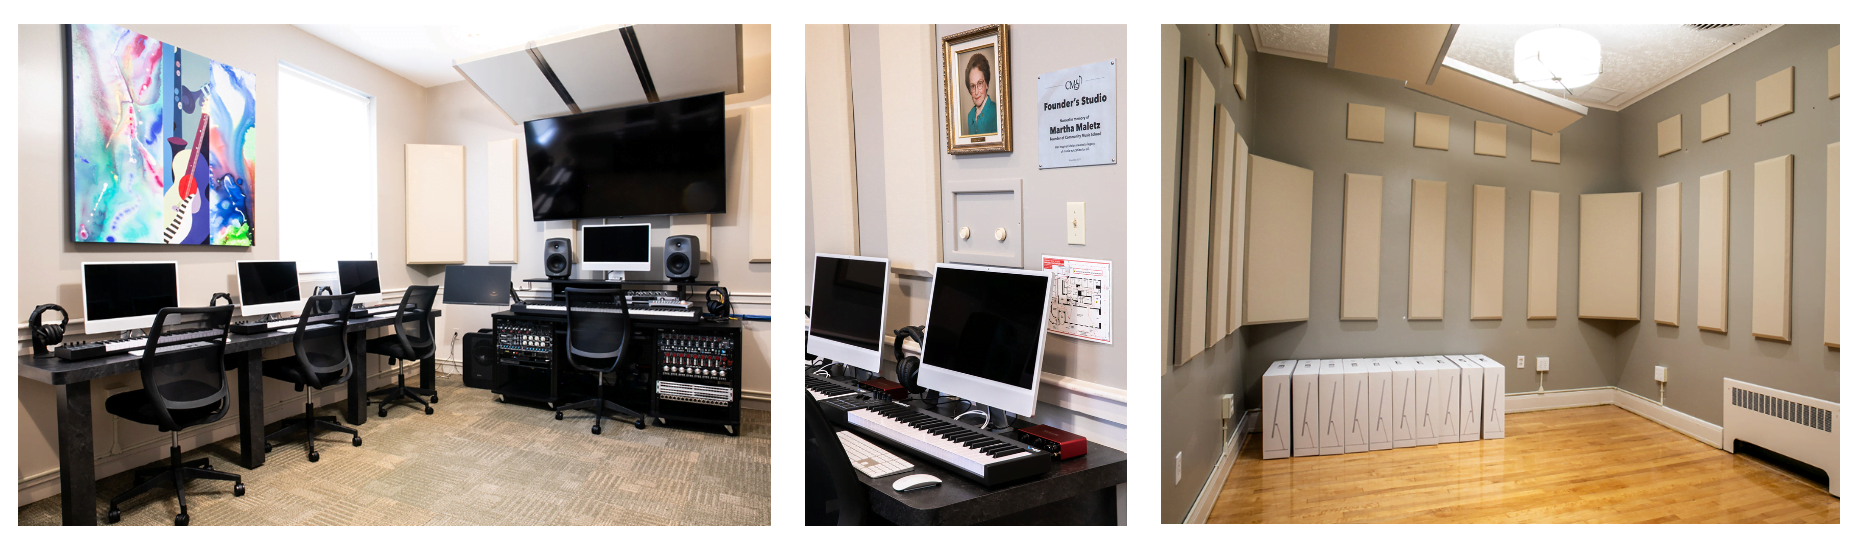 The Presser Foundation Recording Studio at Community Music School